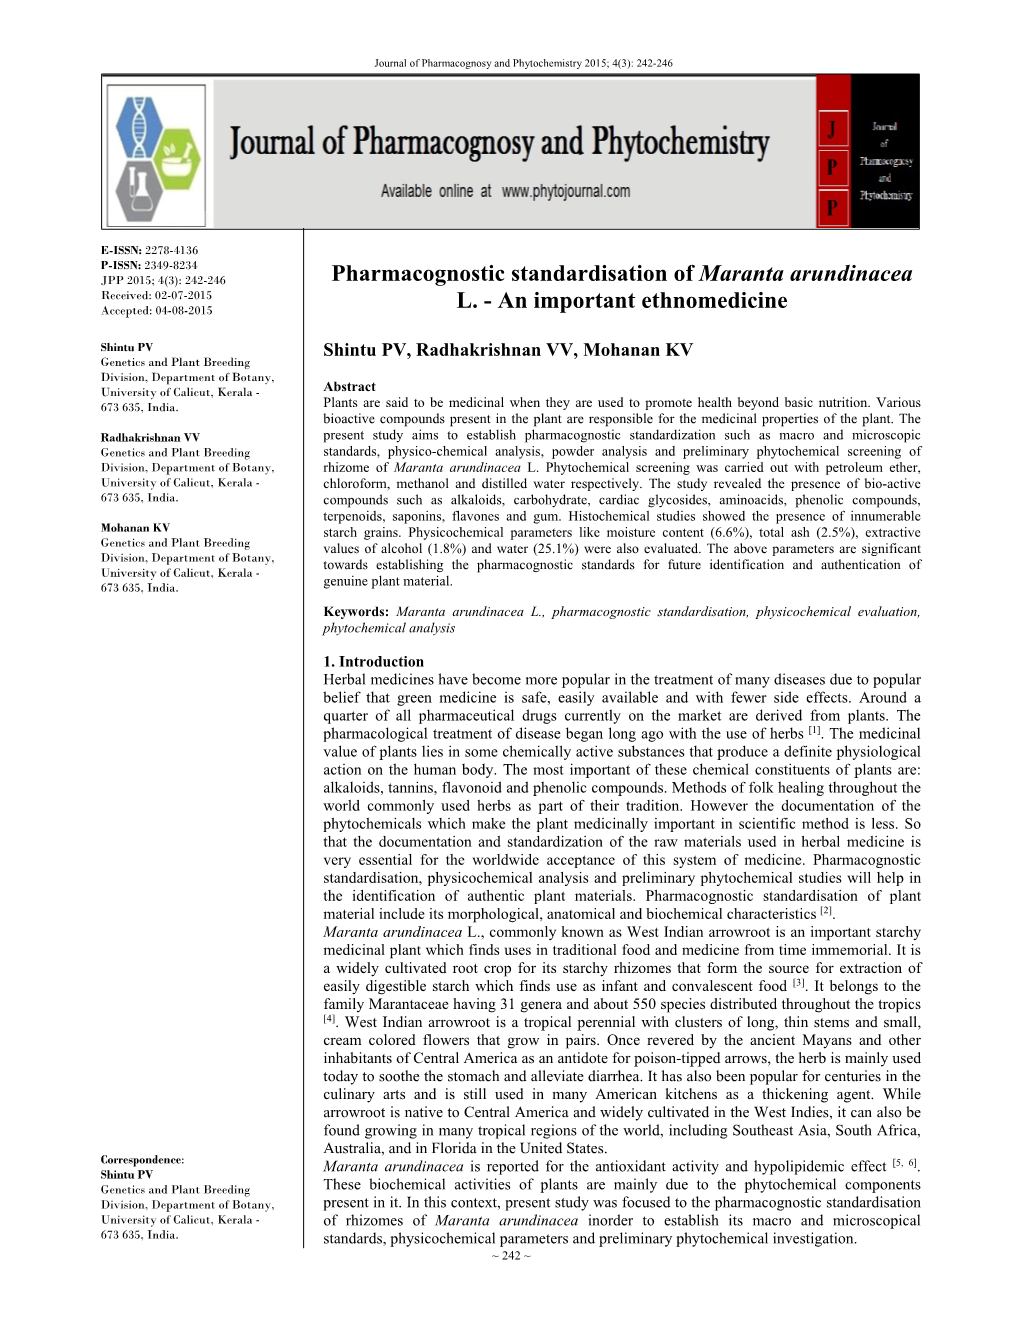 Pharmacognostic Standardisation of Maranta Arundinacea L